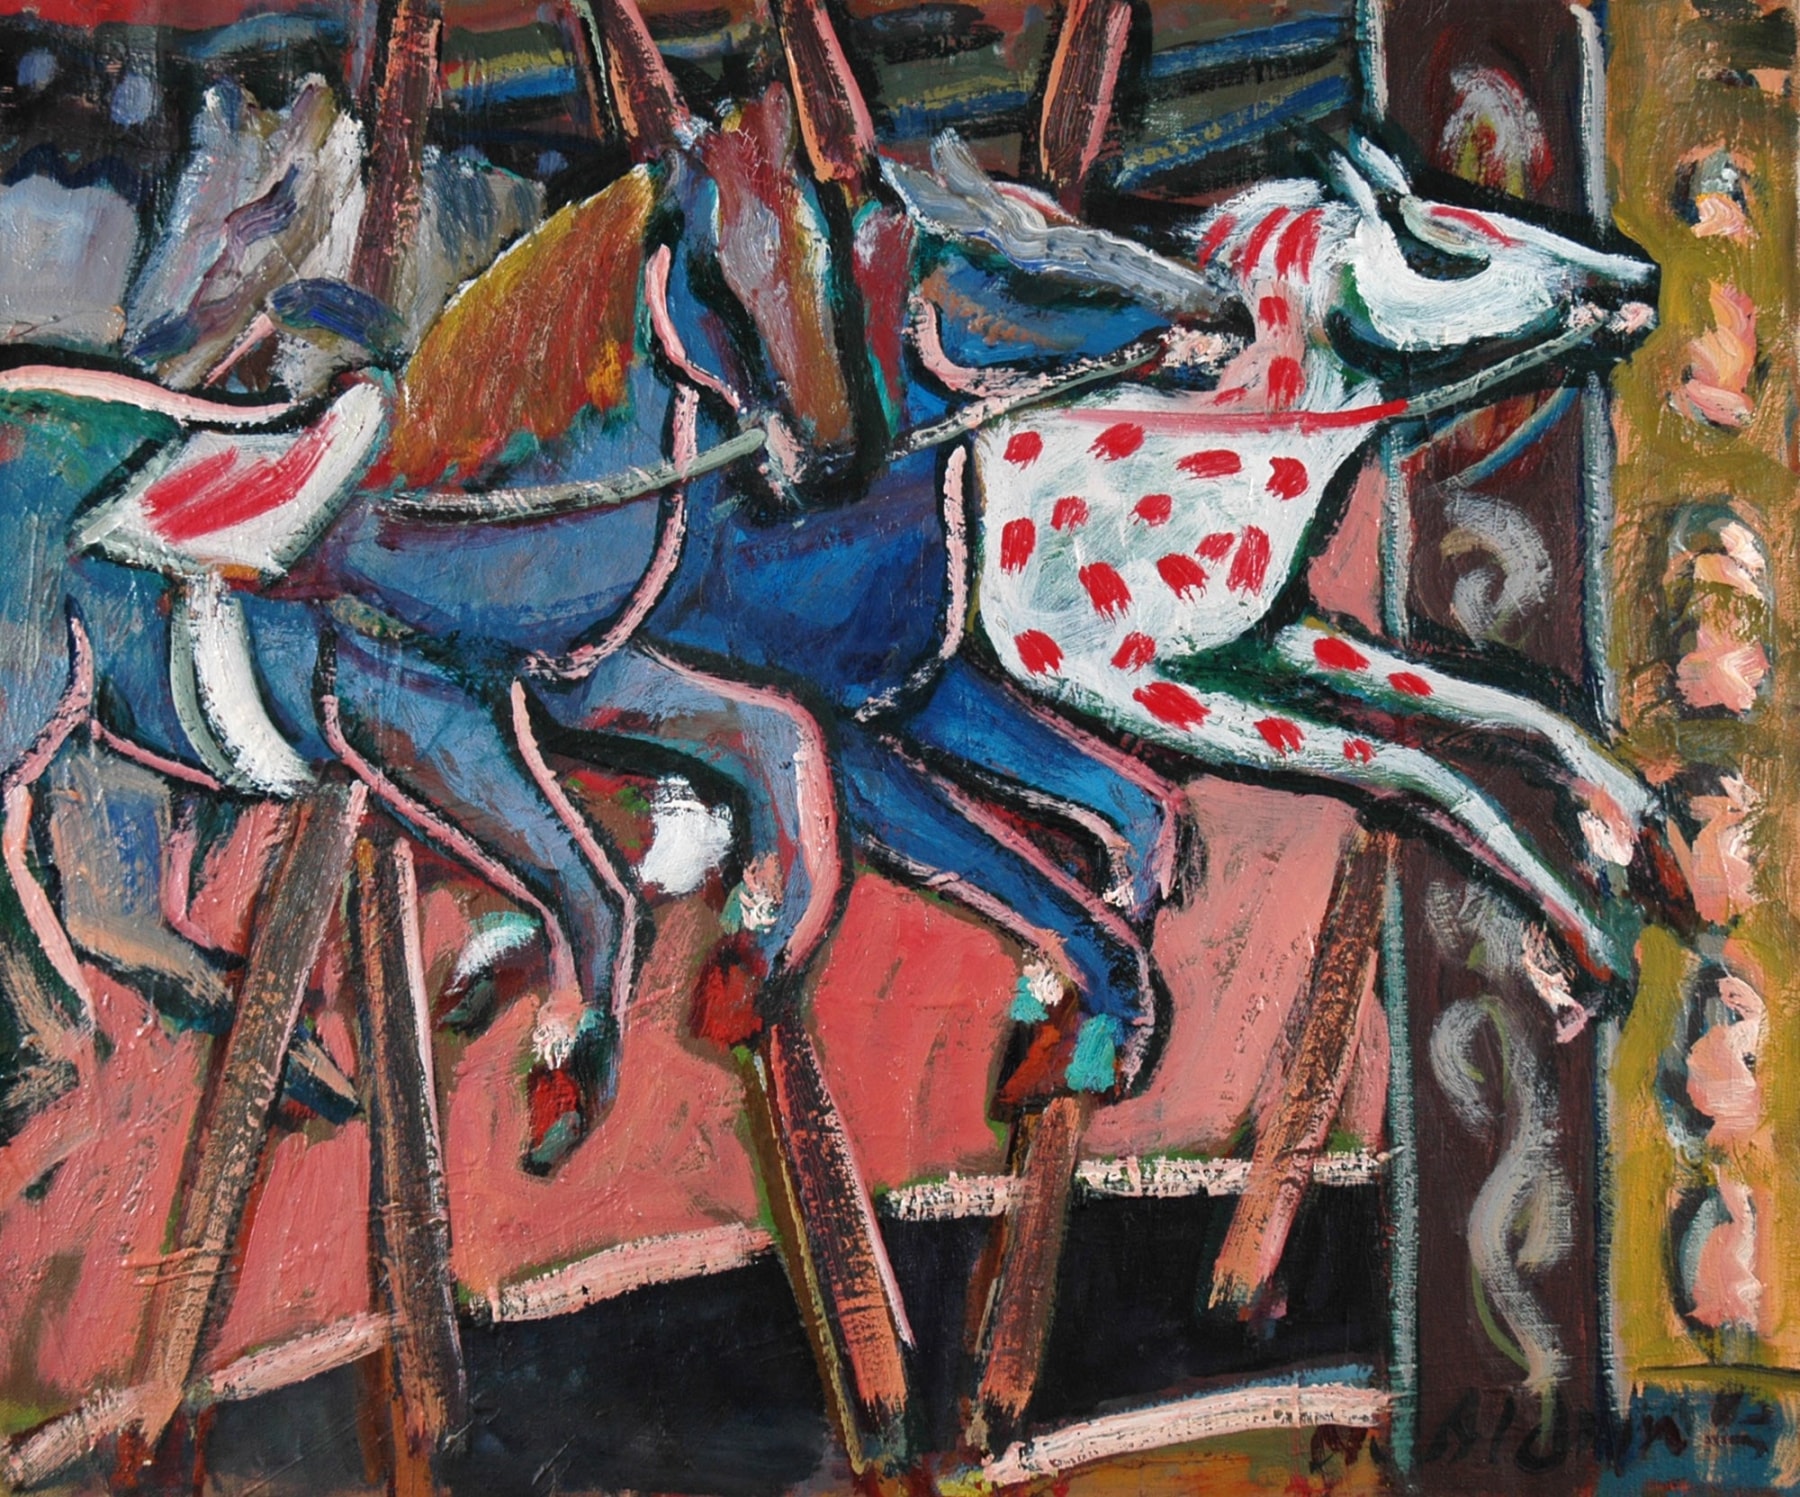 ANDERS ALDRIN (1889-1970), Carousel Horses, c. 1950